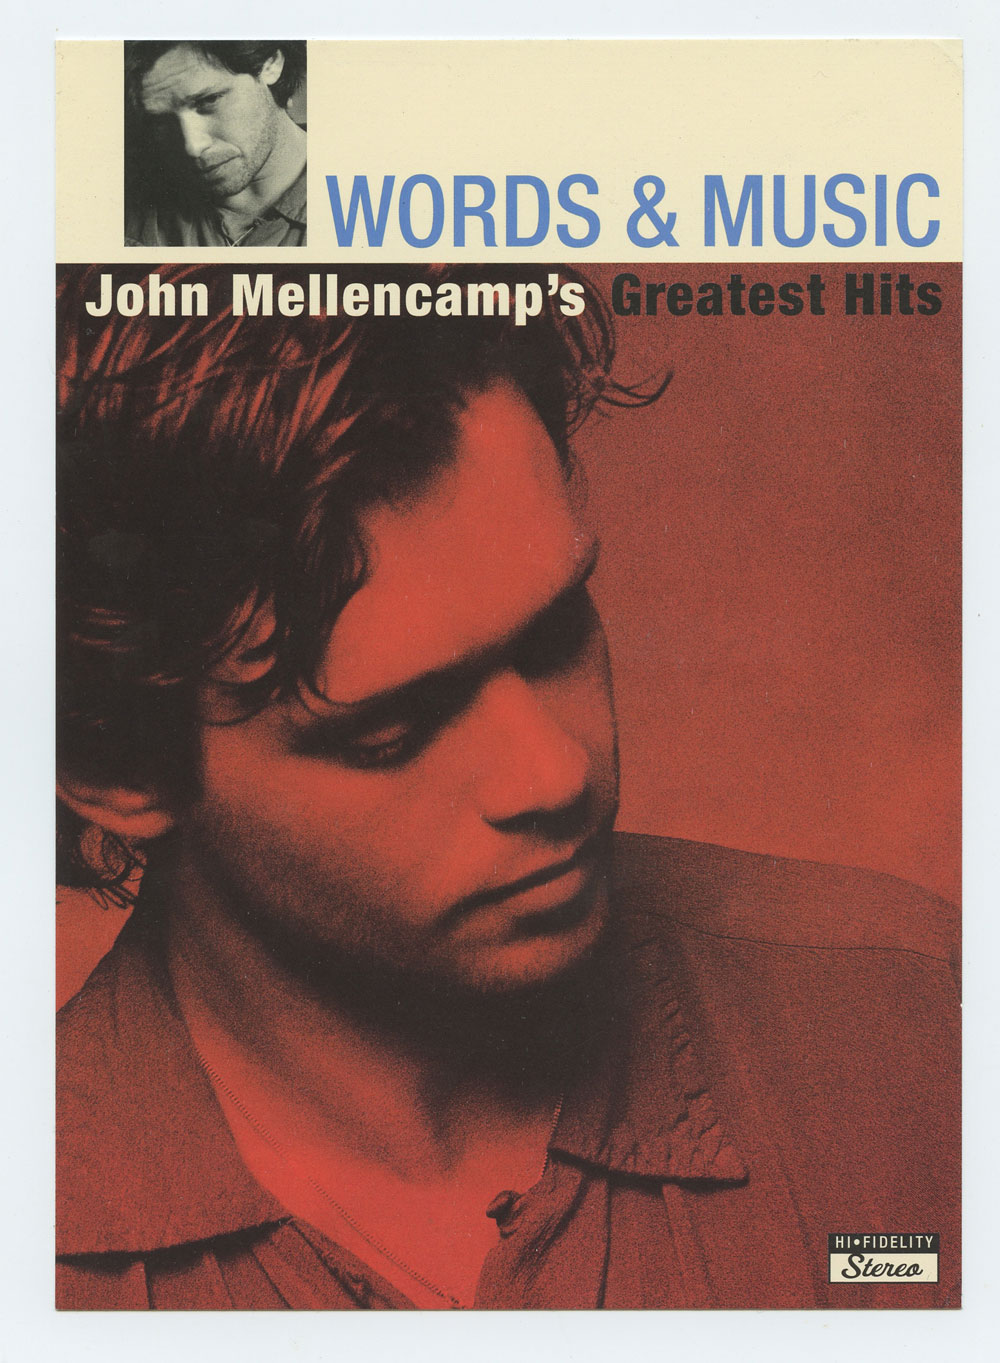 John Mellencamp Handbill Sticker 2004 Greatest Hits Album Promo